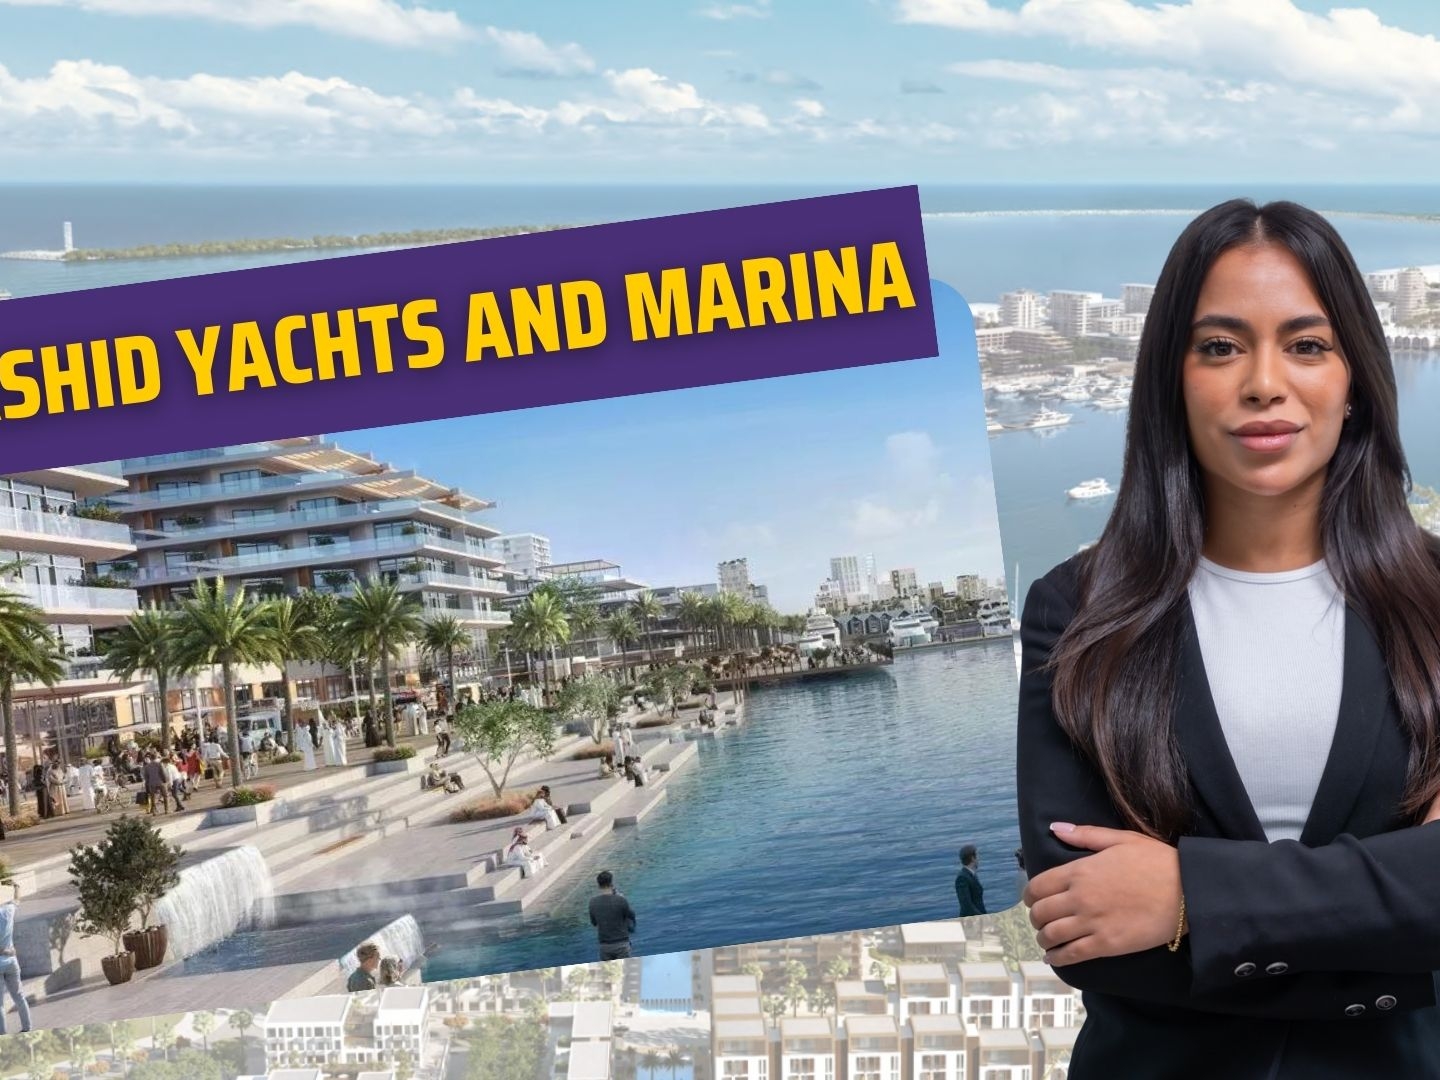 Rashid Yachts & Marina